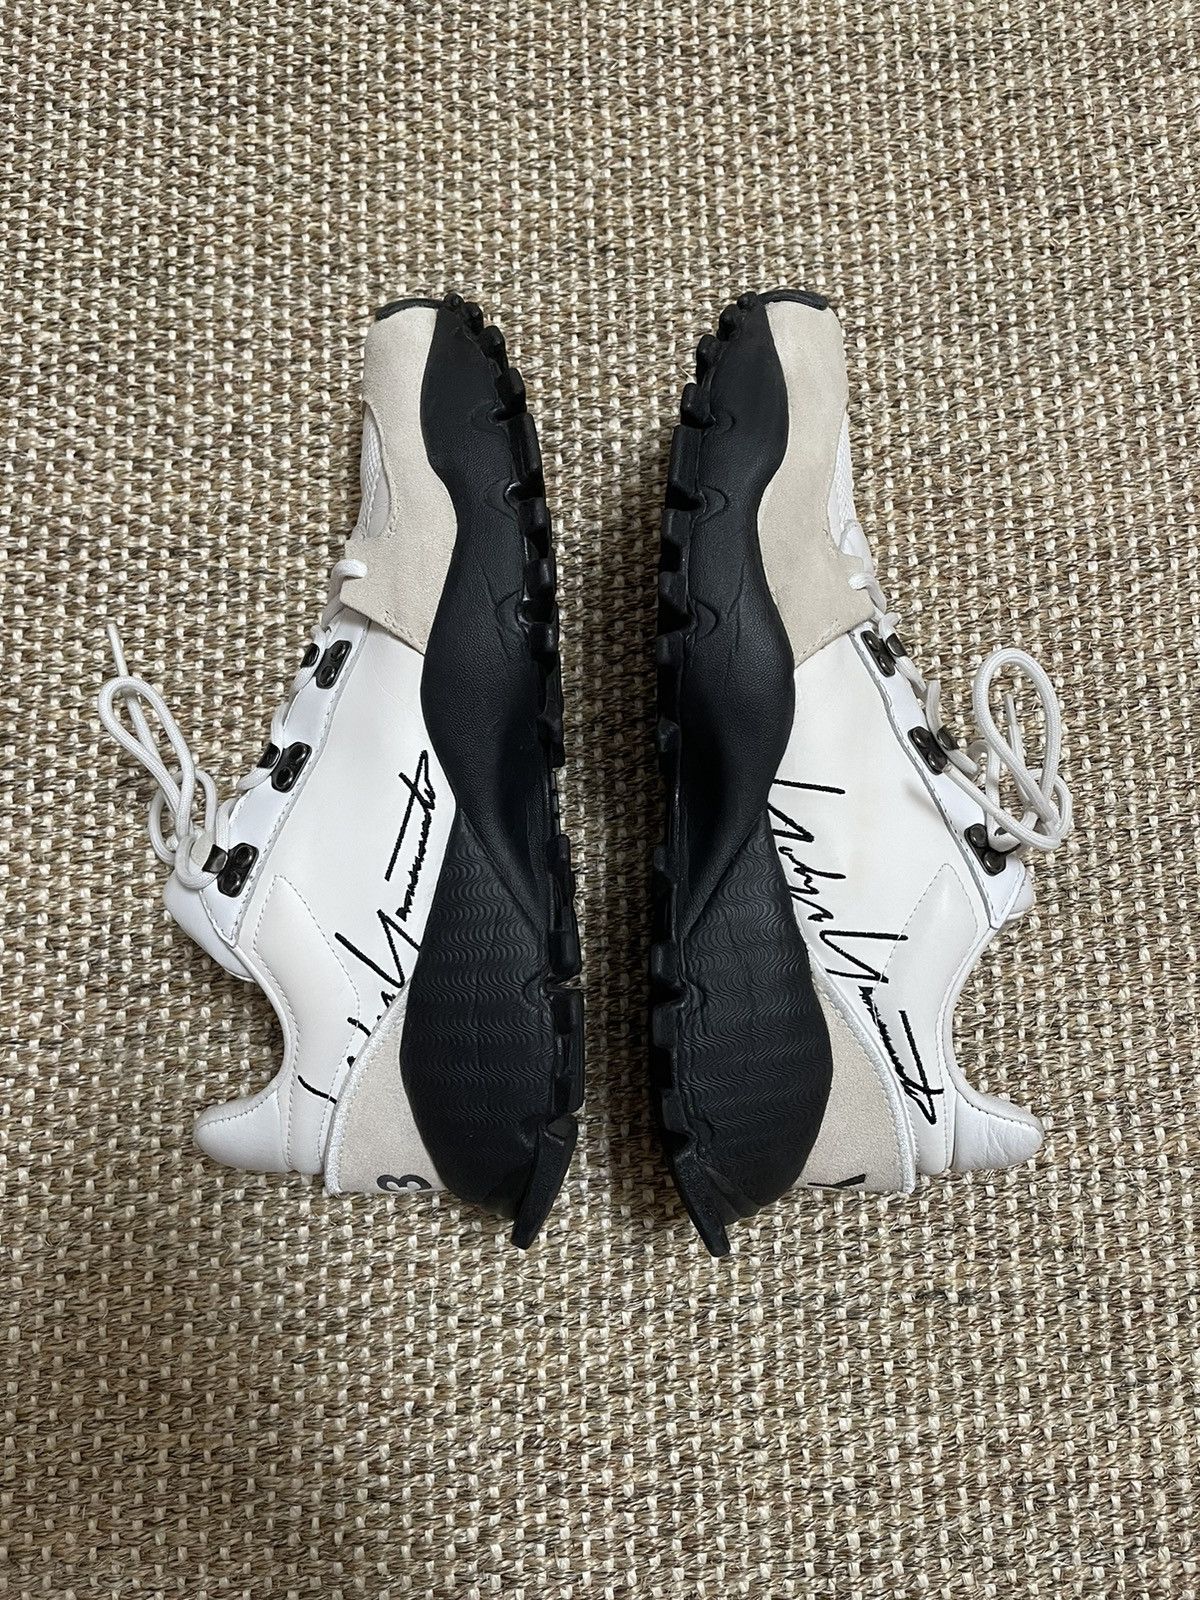 Adidas Y-3 X Adidas Kyoi Trail Sneakers | Grailed